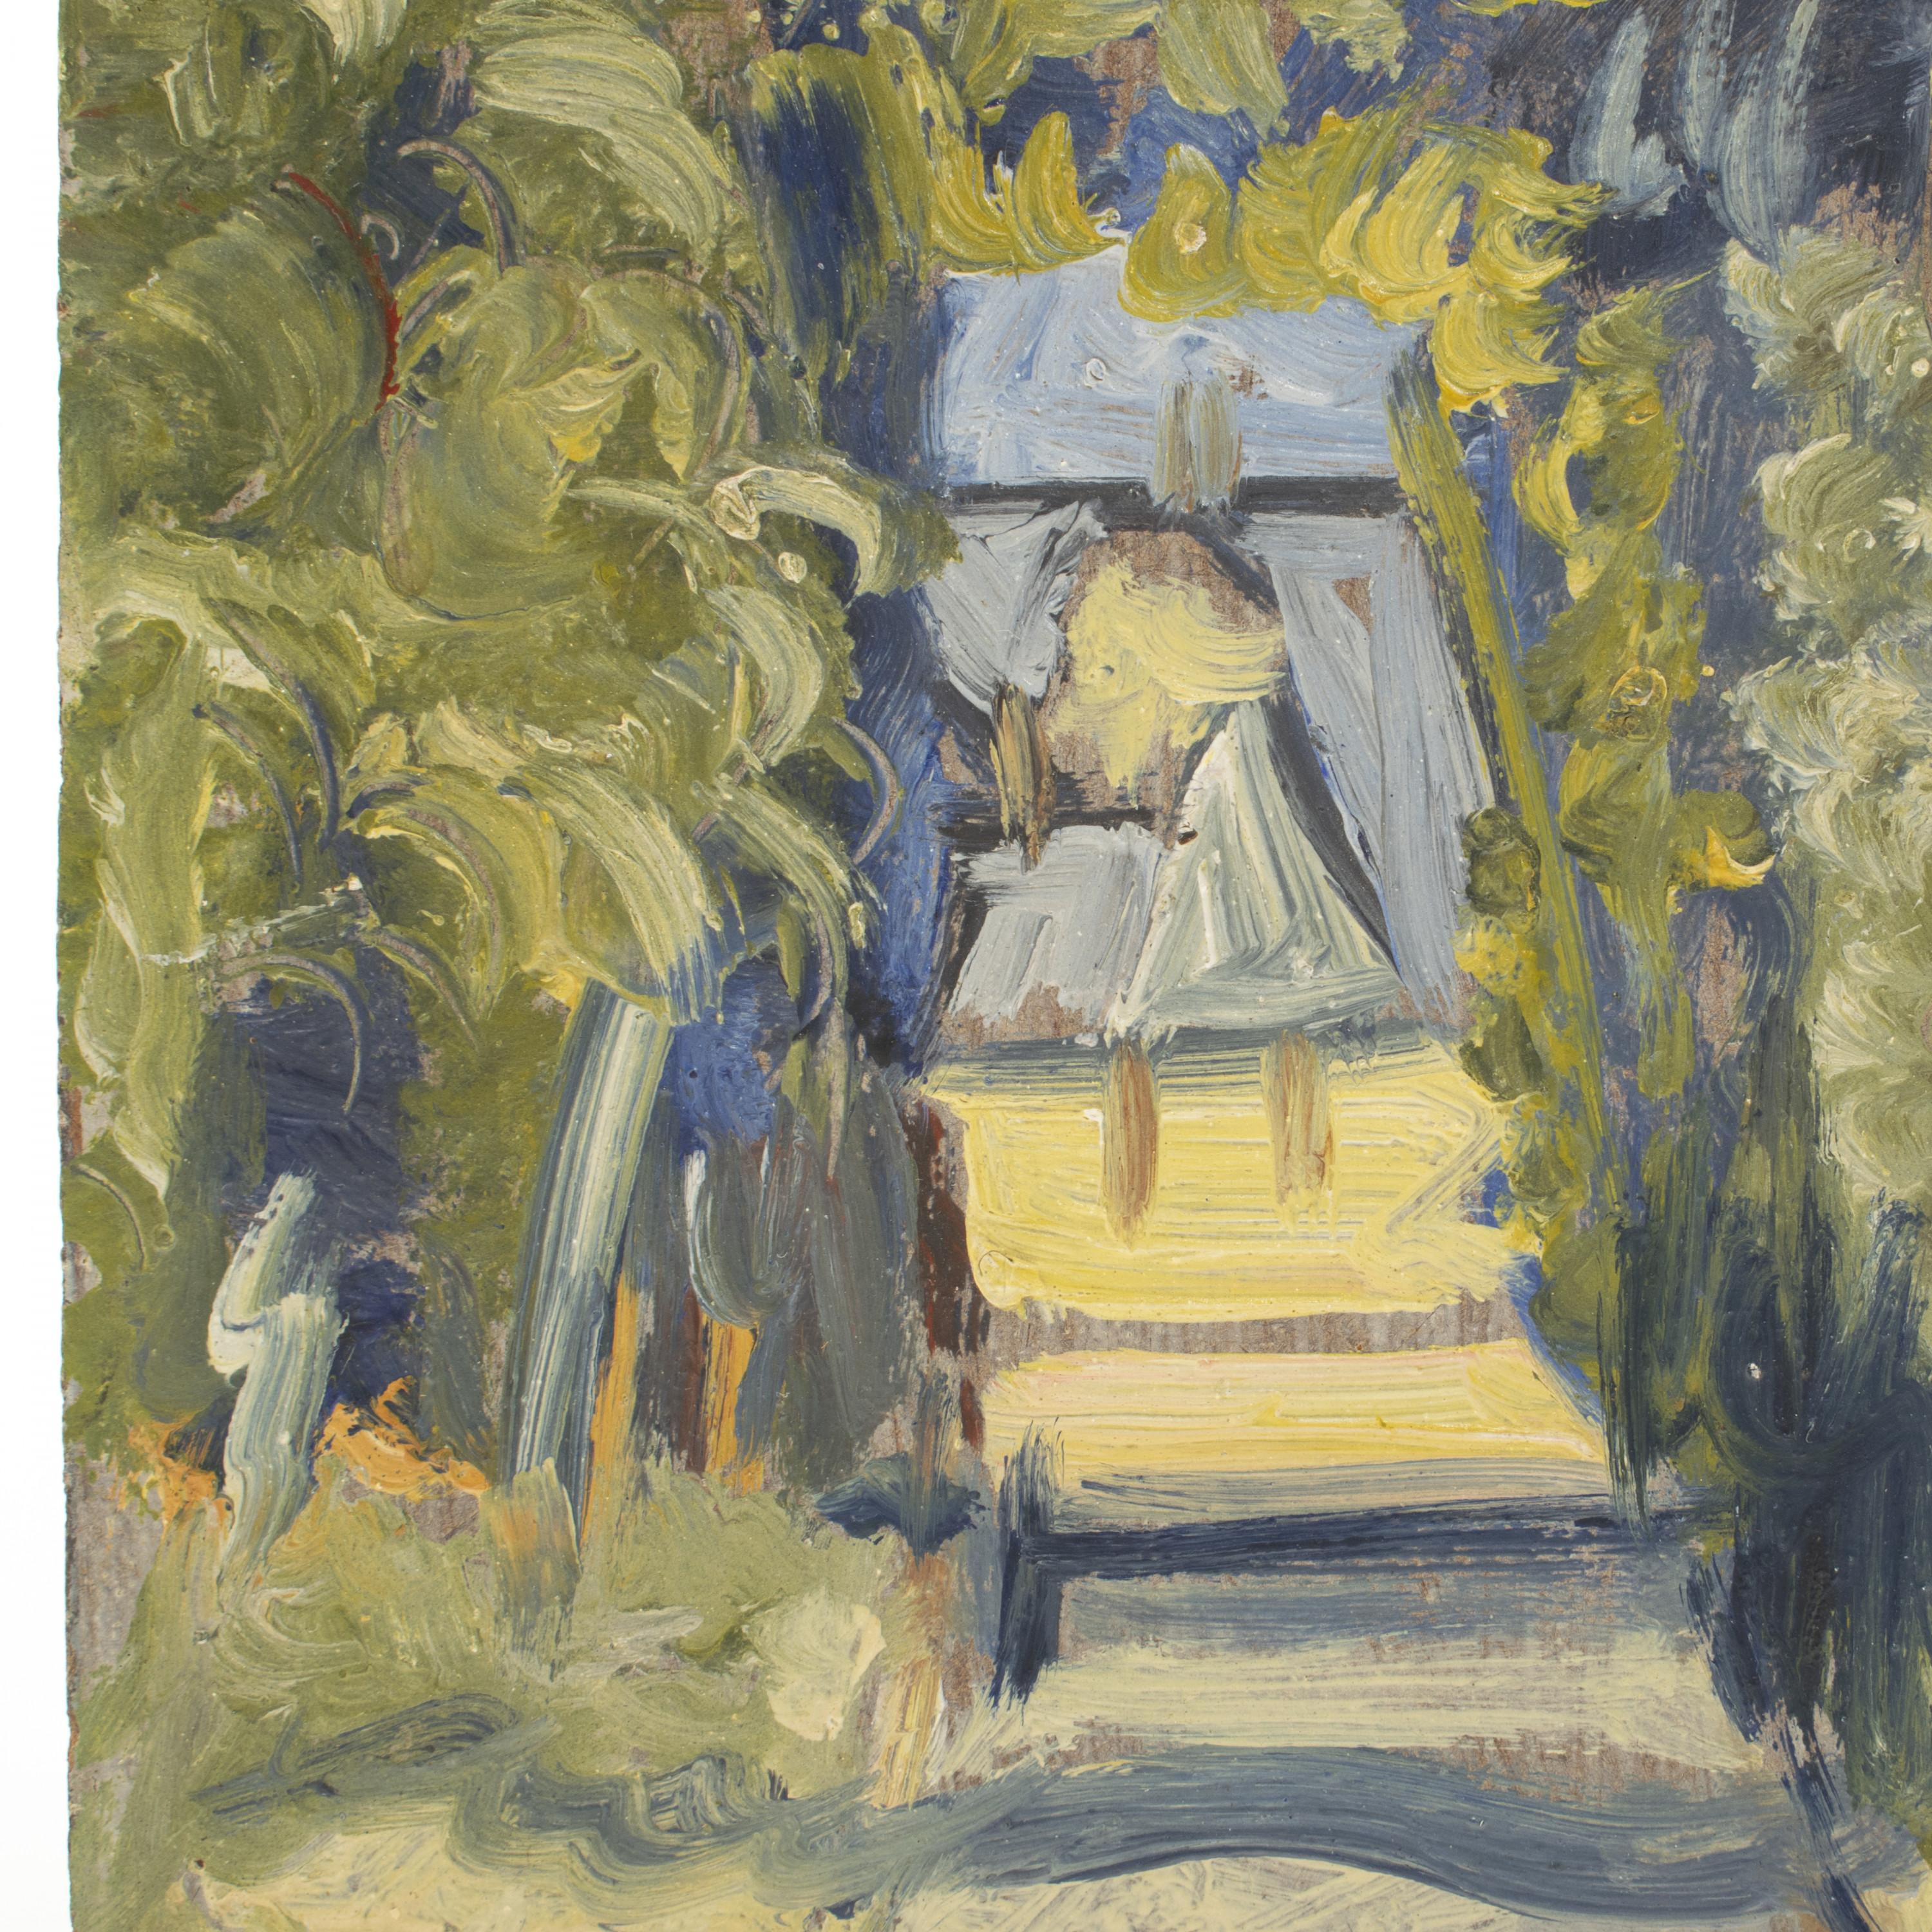 Eugéne de Sala, 1899 - 1989.
Small painting 